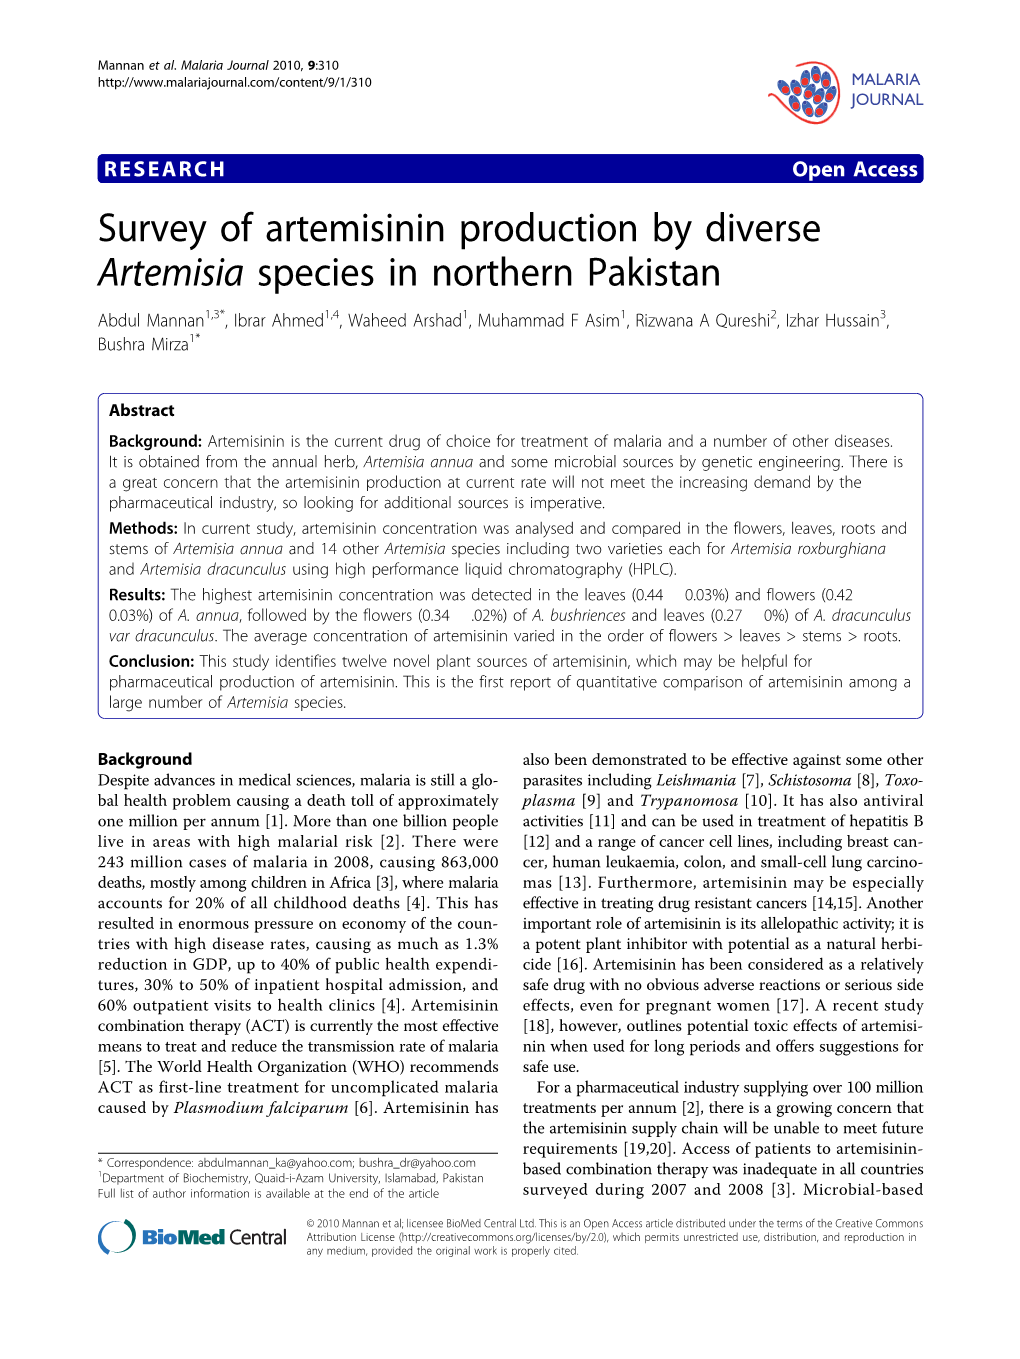 Survey of Artemisinin Production by Diverse Artemisia Species in Northern Pakistan